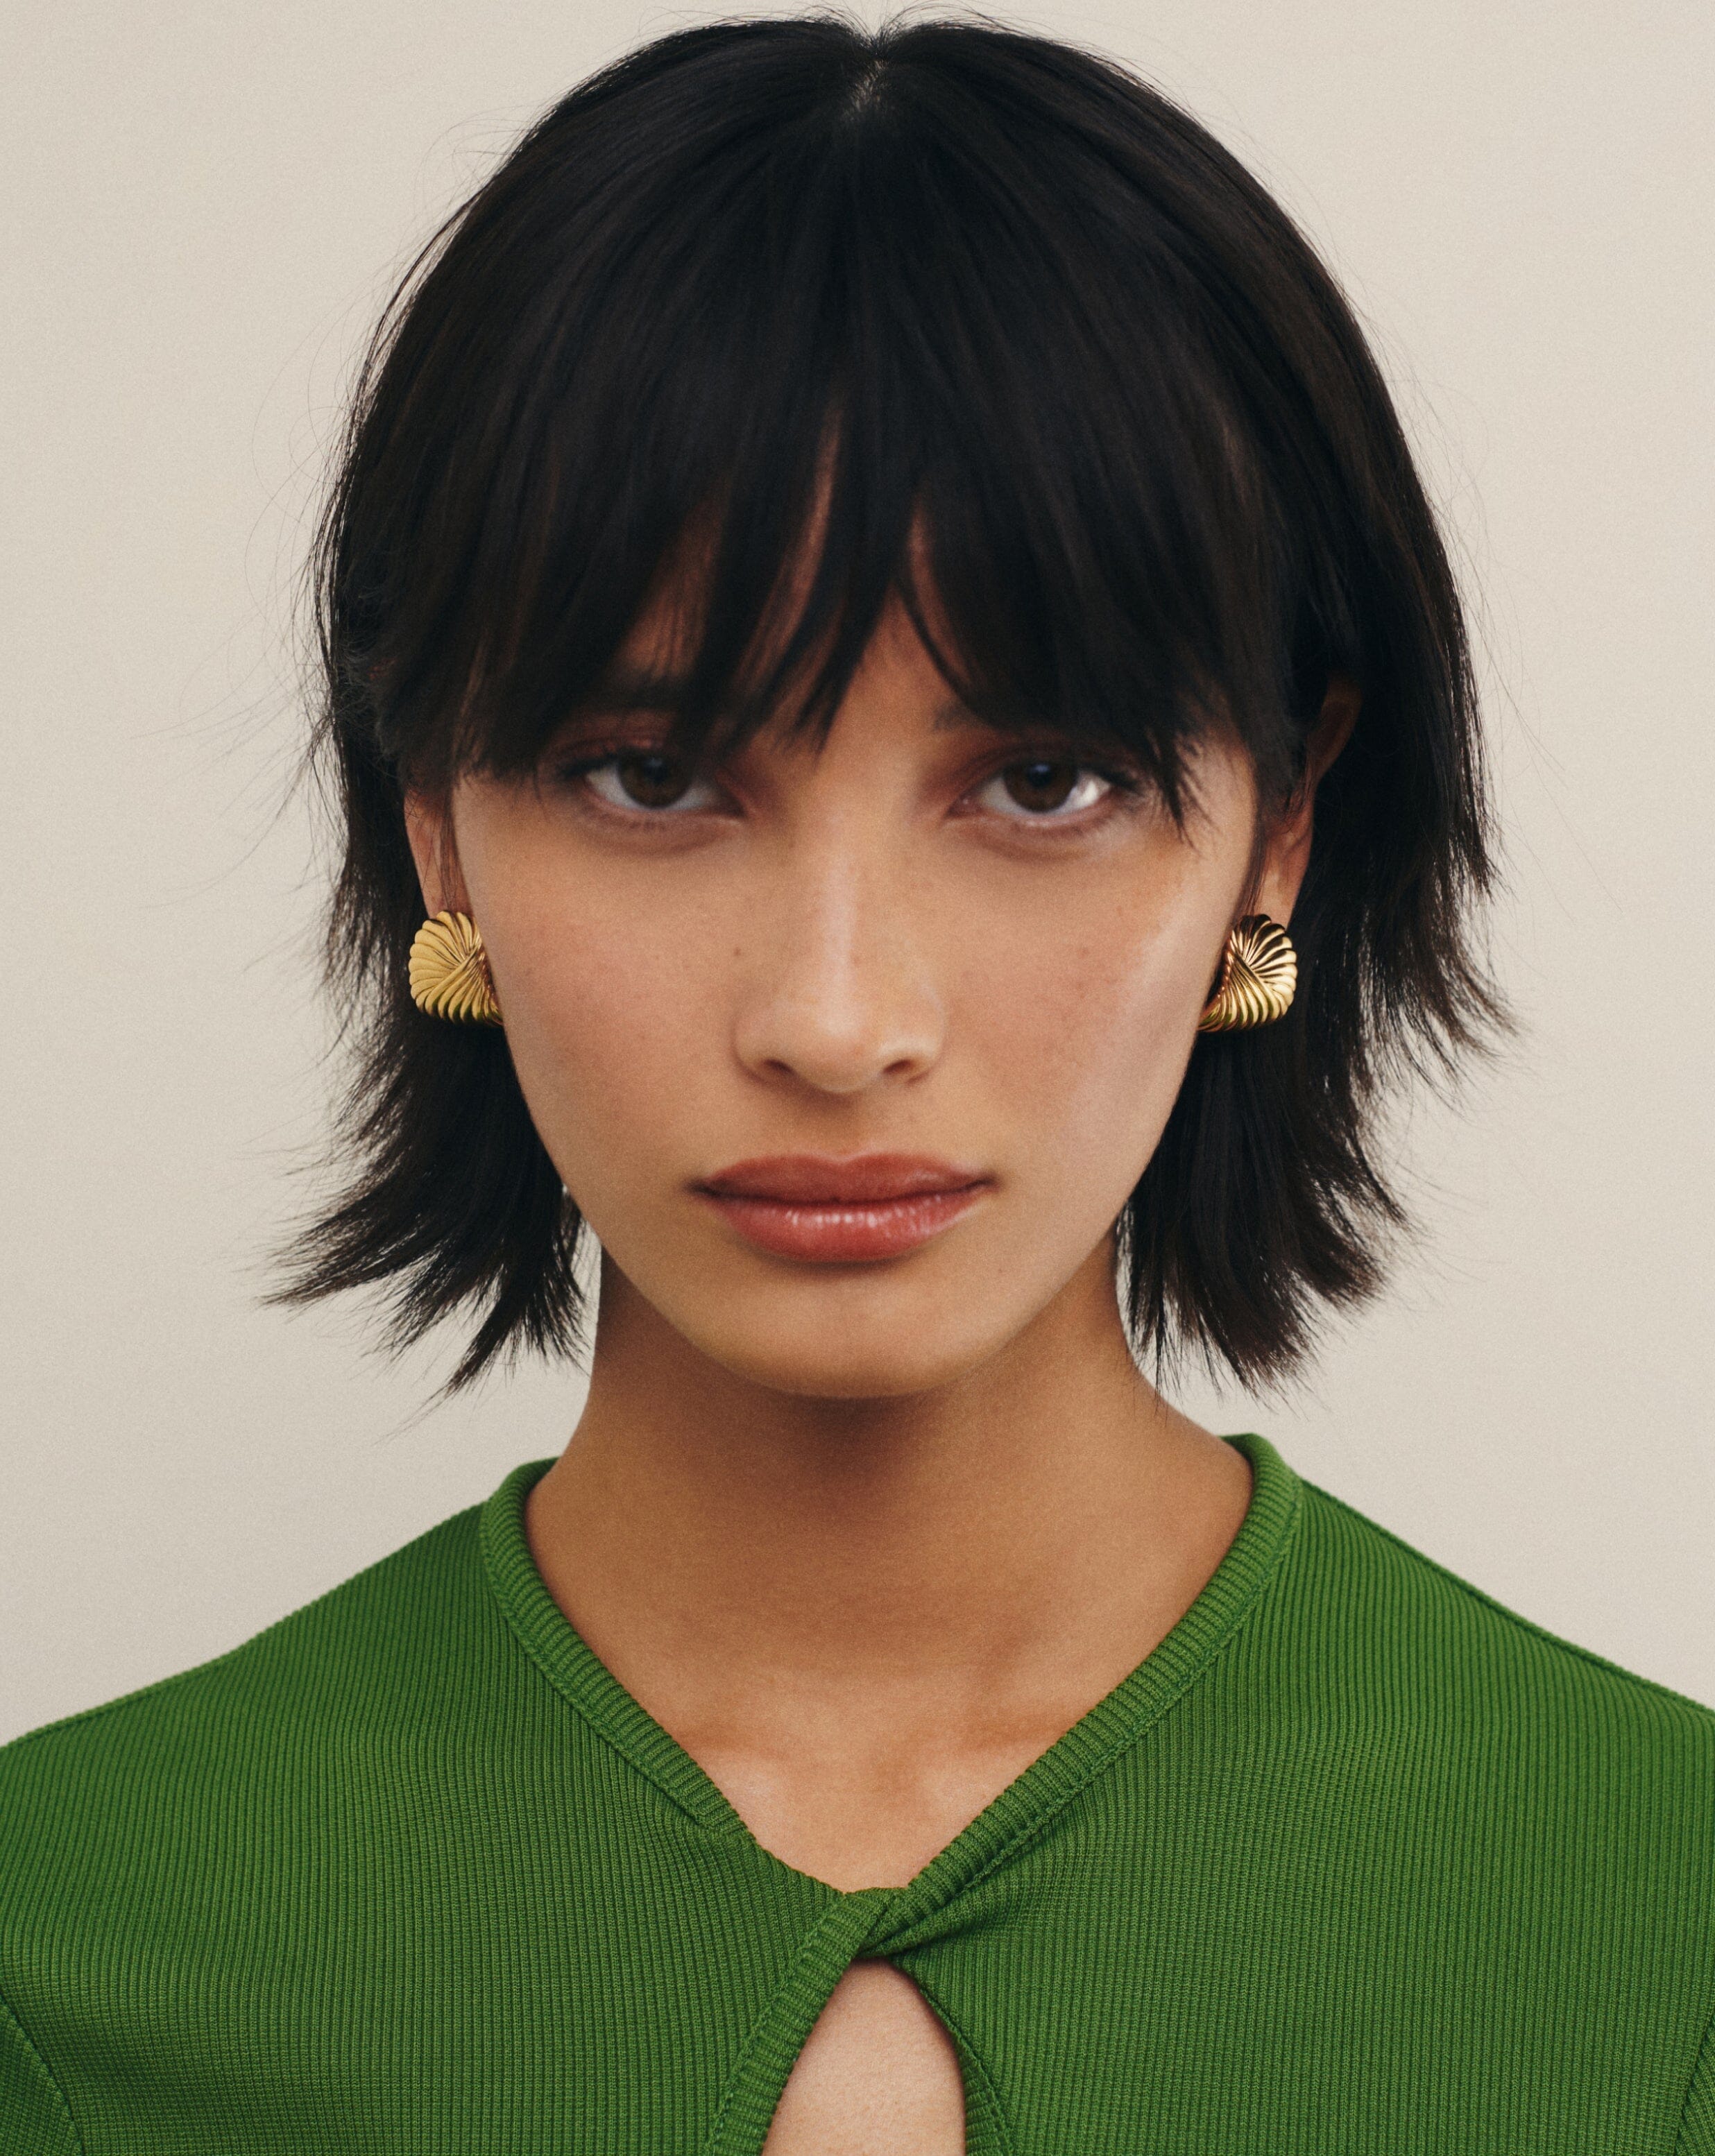 Ripple Oversized Stud Earrings | 18ct Gold Plated Earrings Missoma 